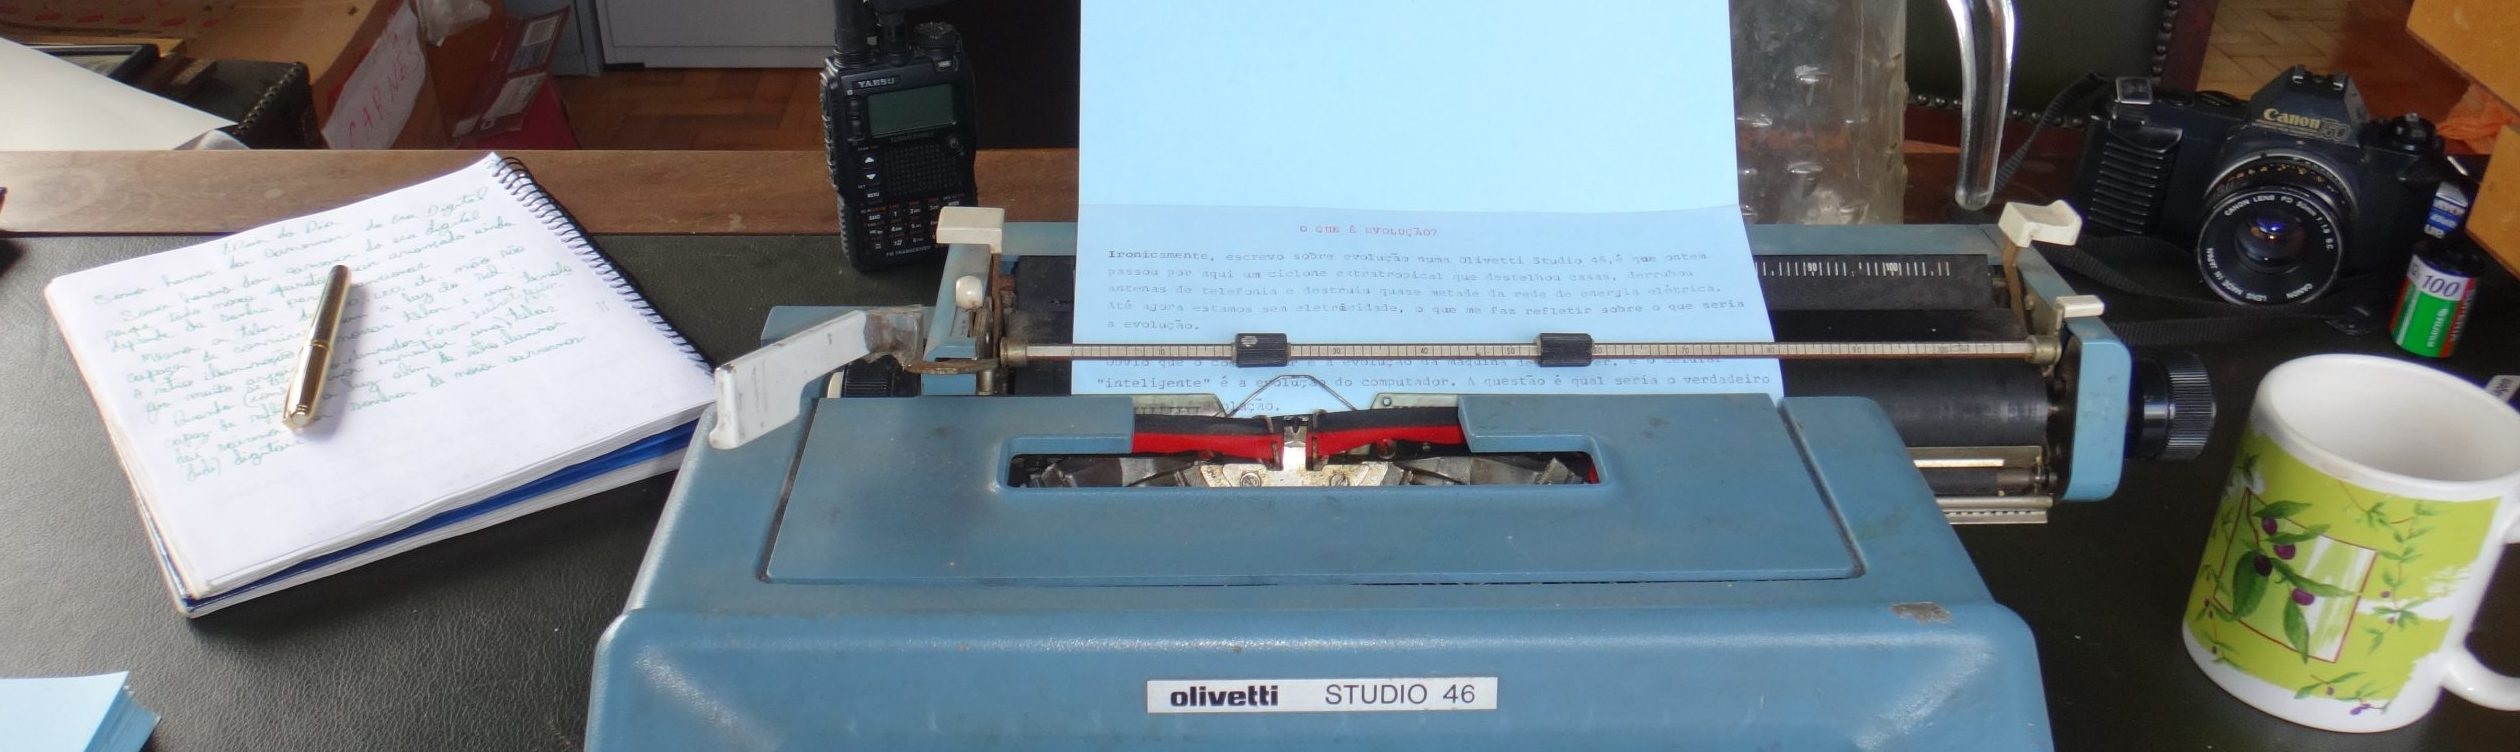 Calculadora Divisumma 24 Olivetti – Tutorial com Raul